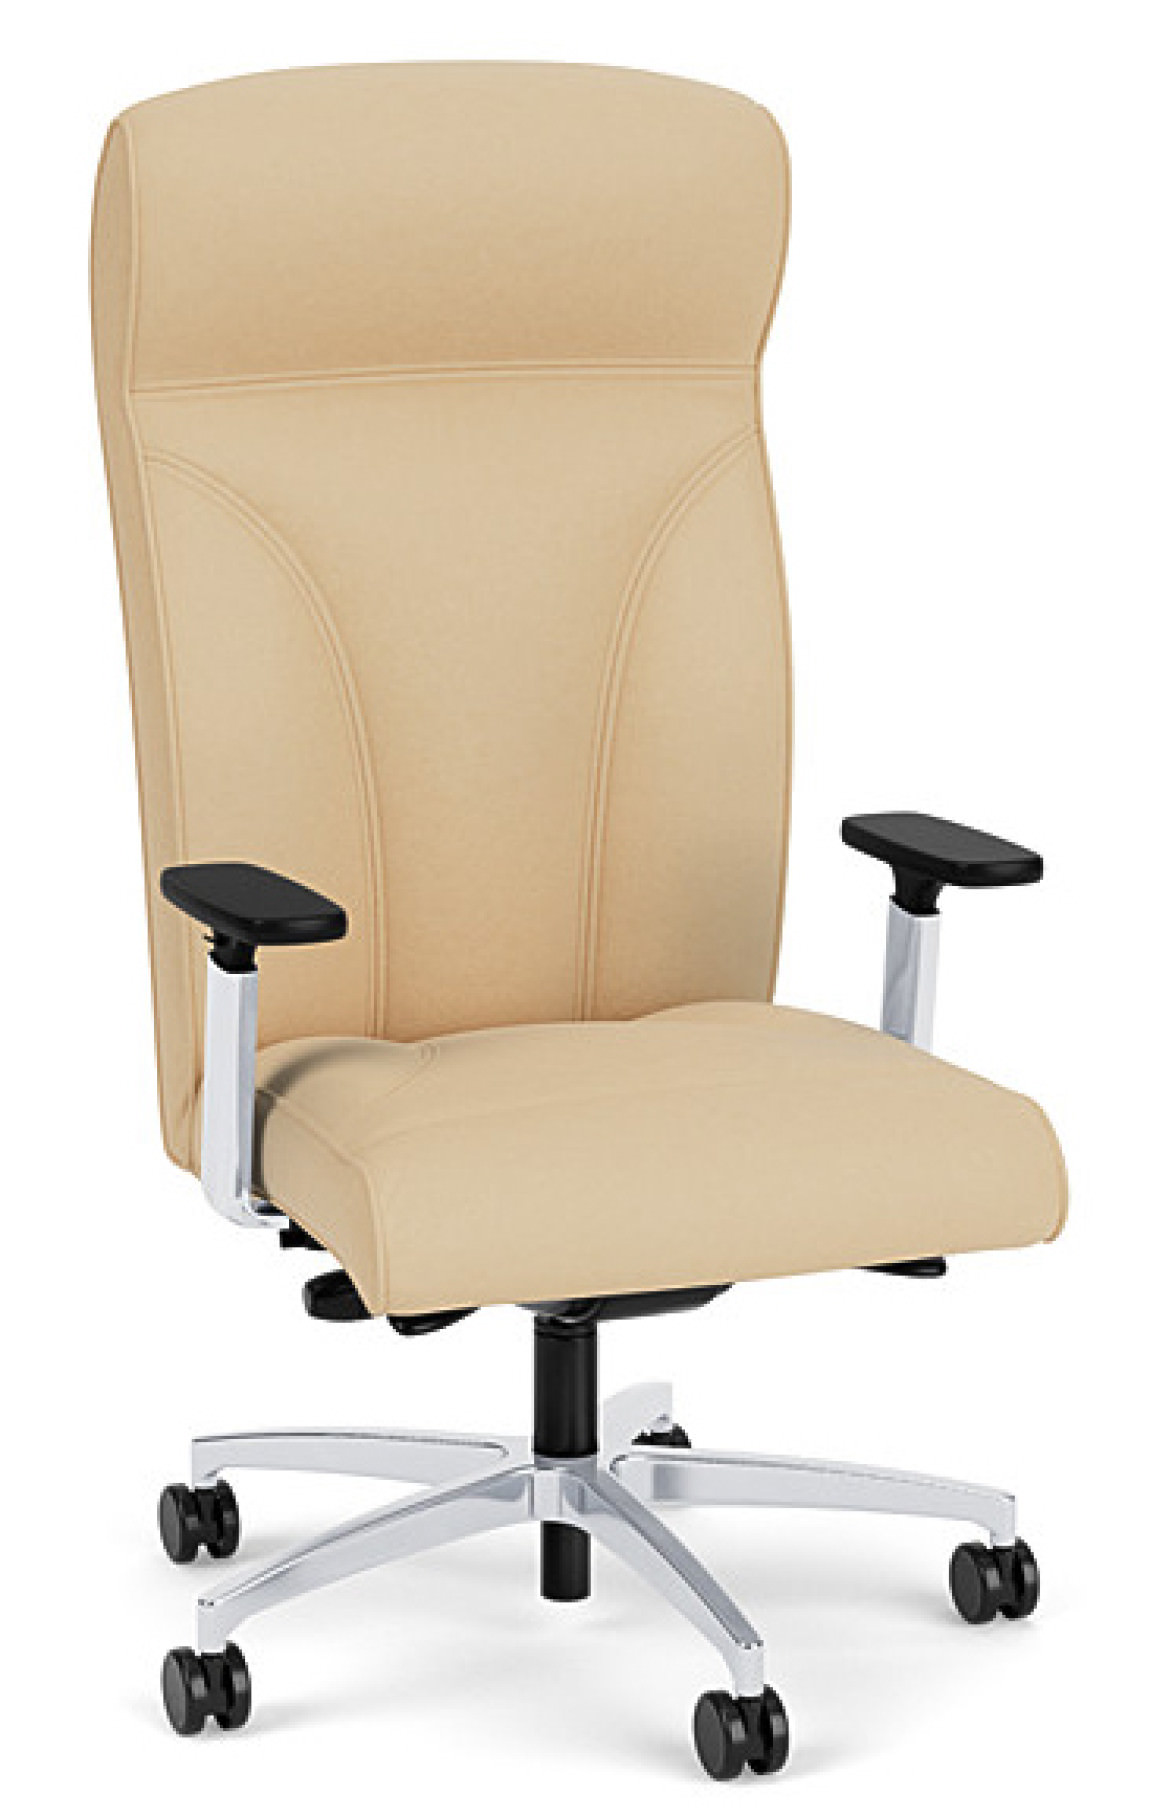 Leather Executive High Back Chair - Heavy Duty